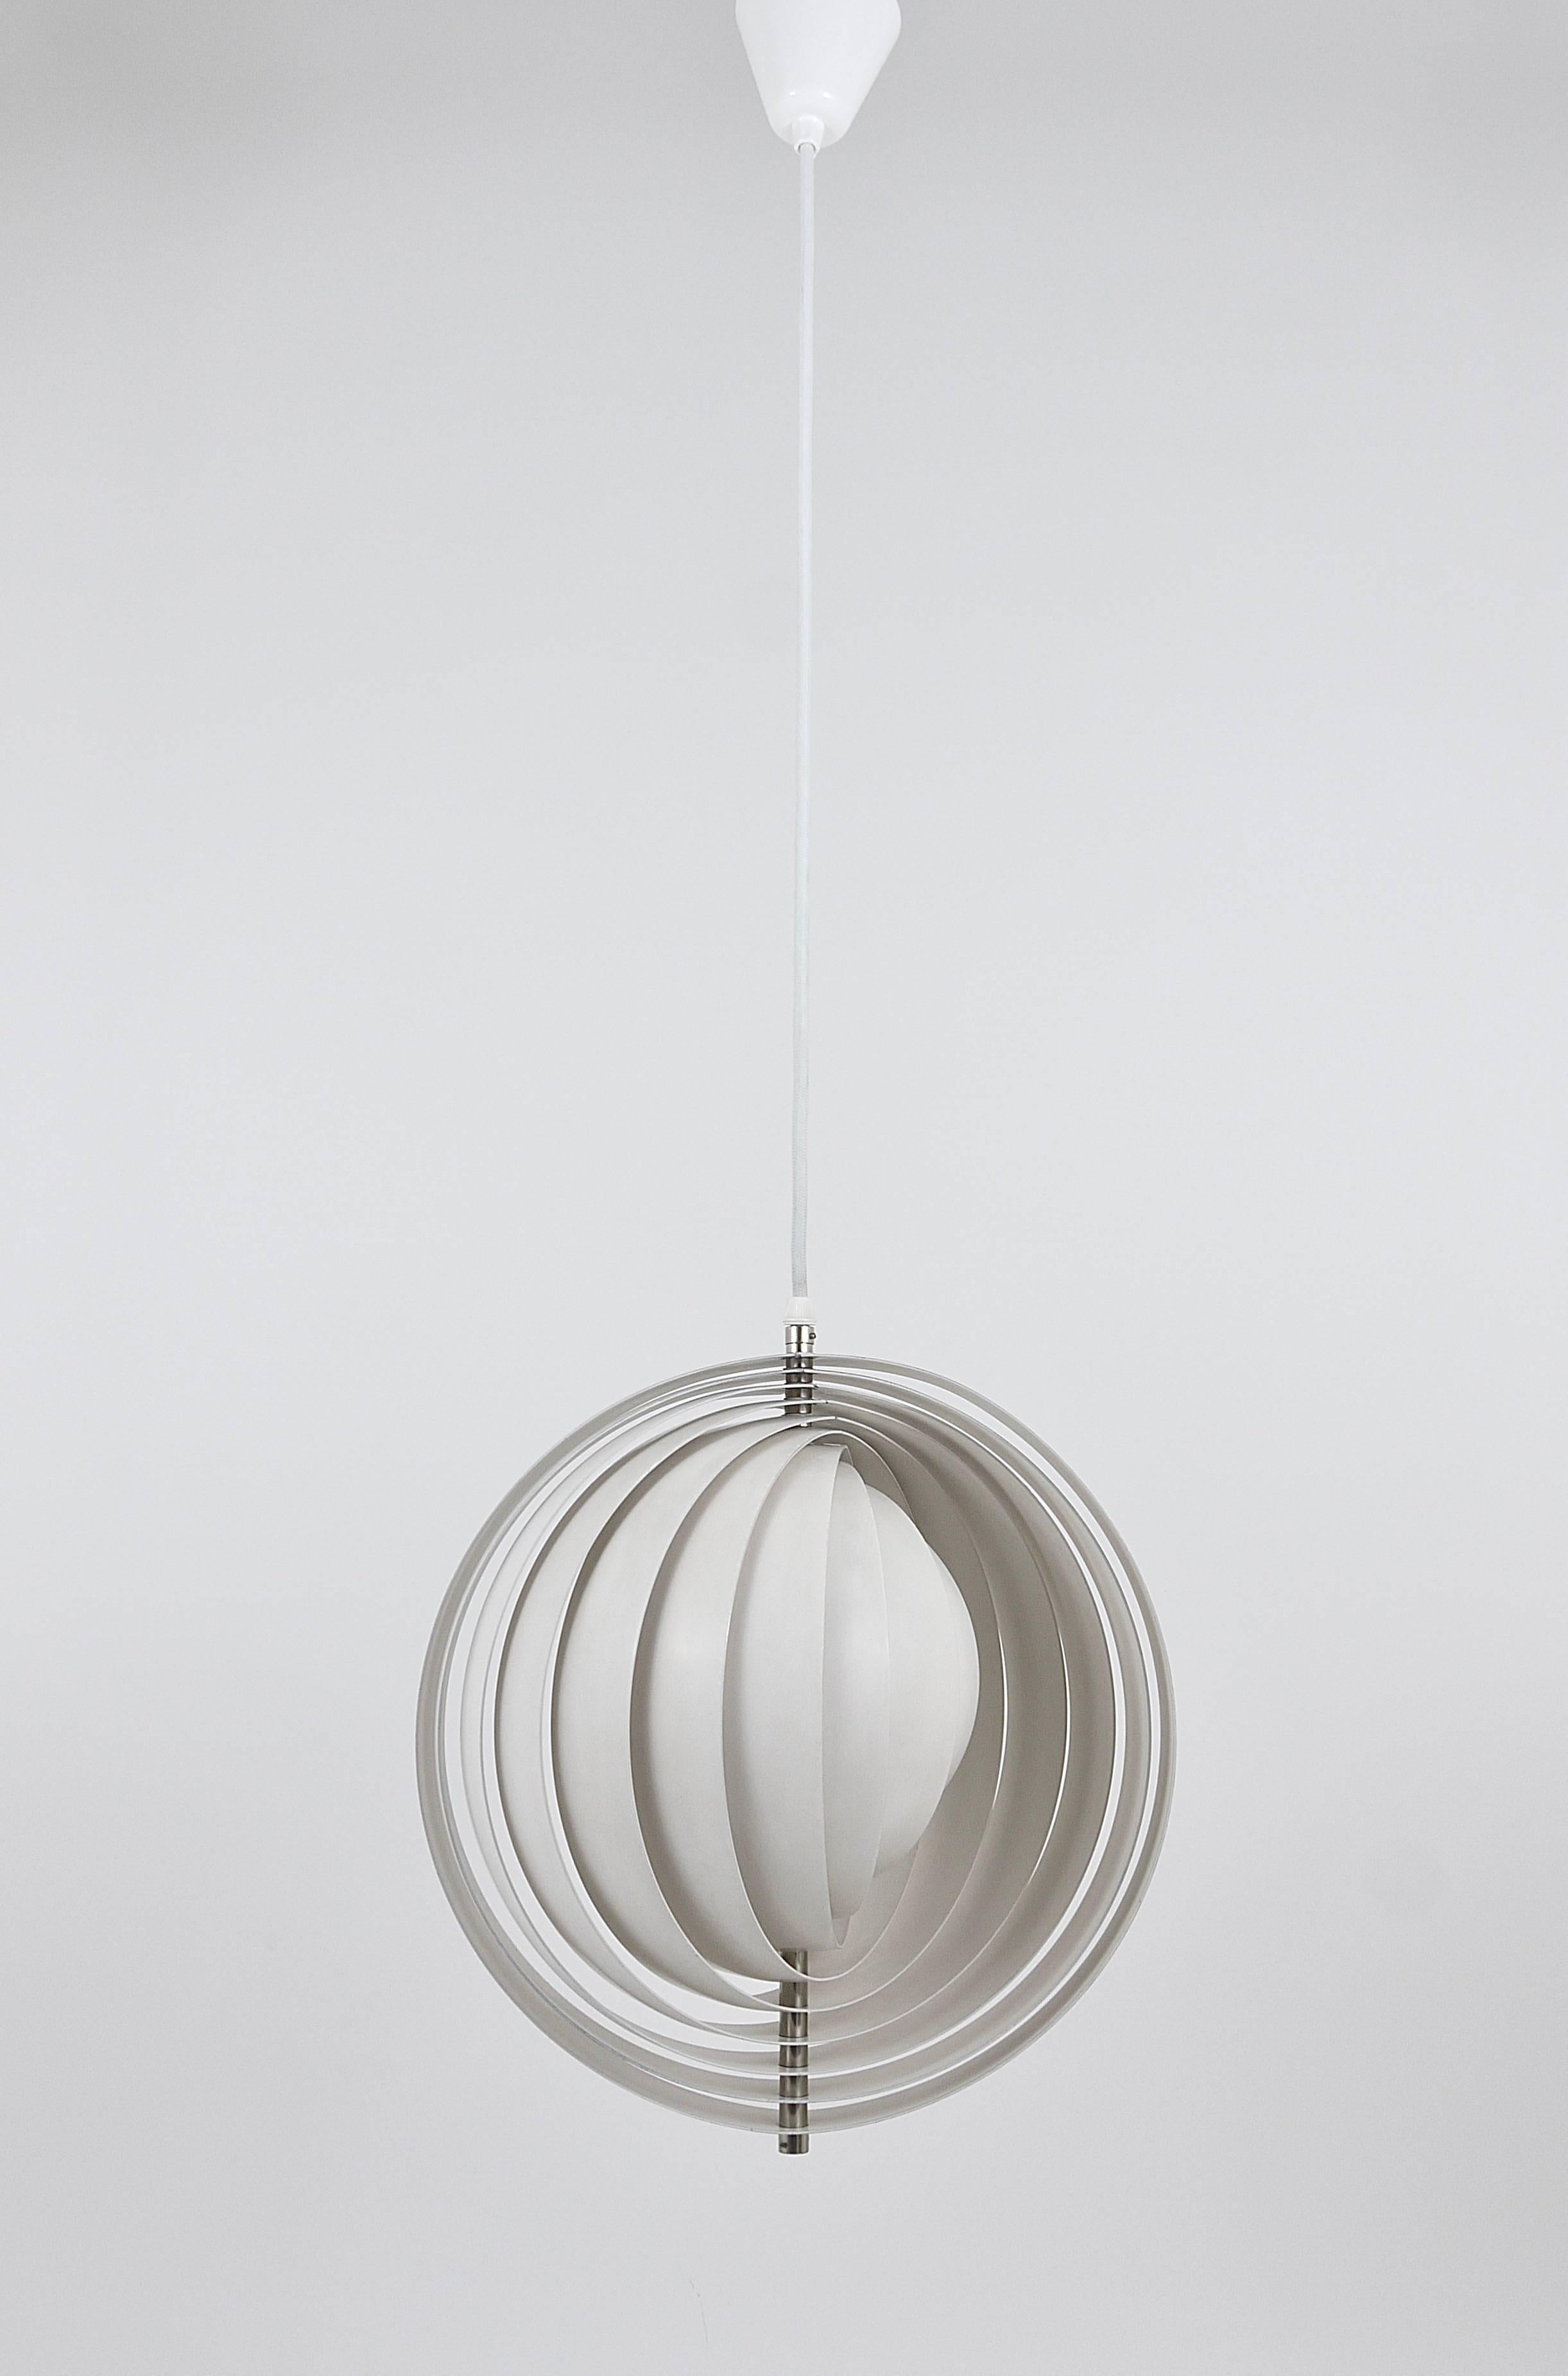 Weiße Verner Panton Op-Art Mondlampe Visor-Lampe, Louis Poulsen, Dänemark, 1960er Jahre (20. Jahrhundert) im Angebot